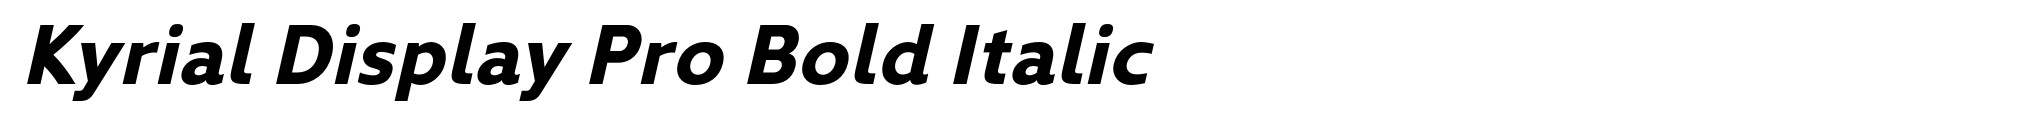 Kyrial Display Pro Bold Italic image